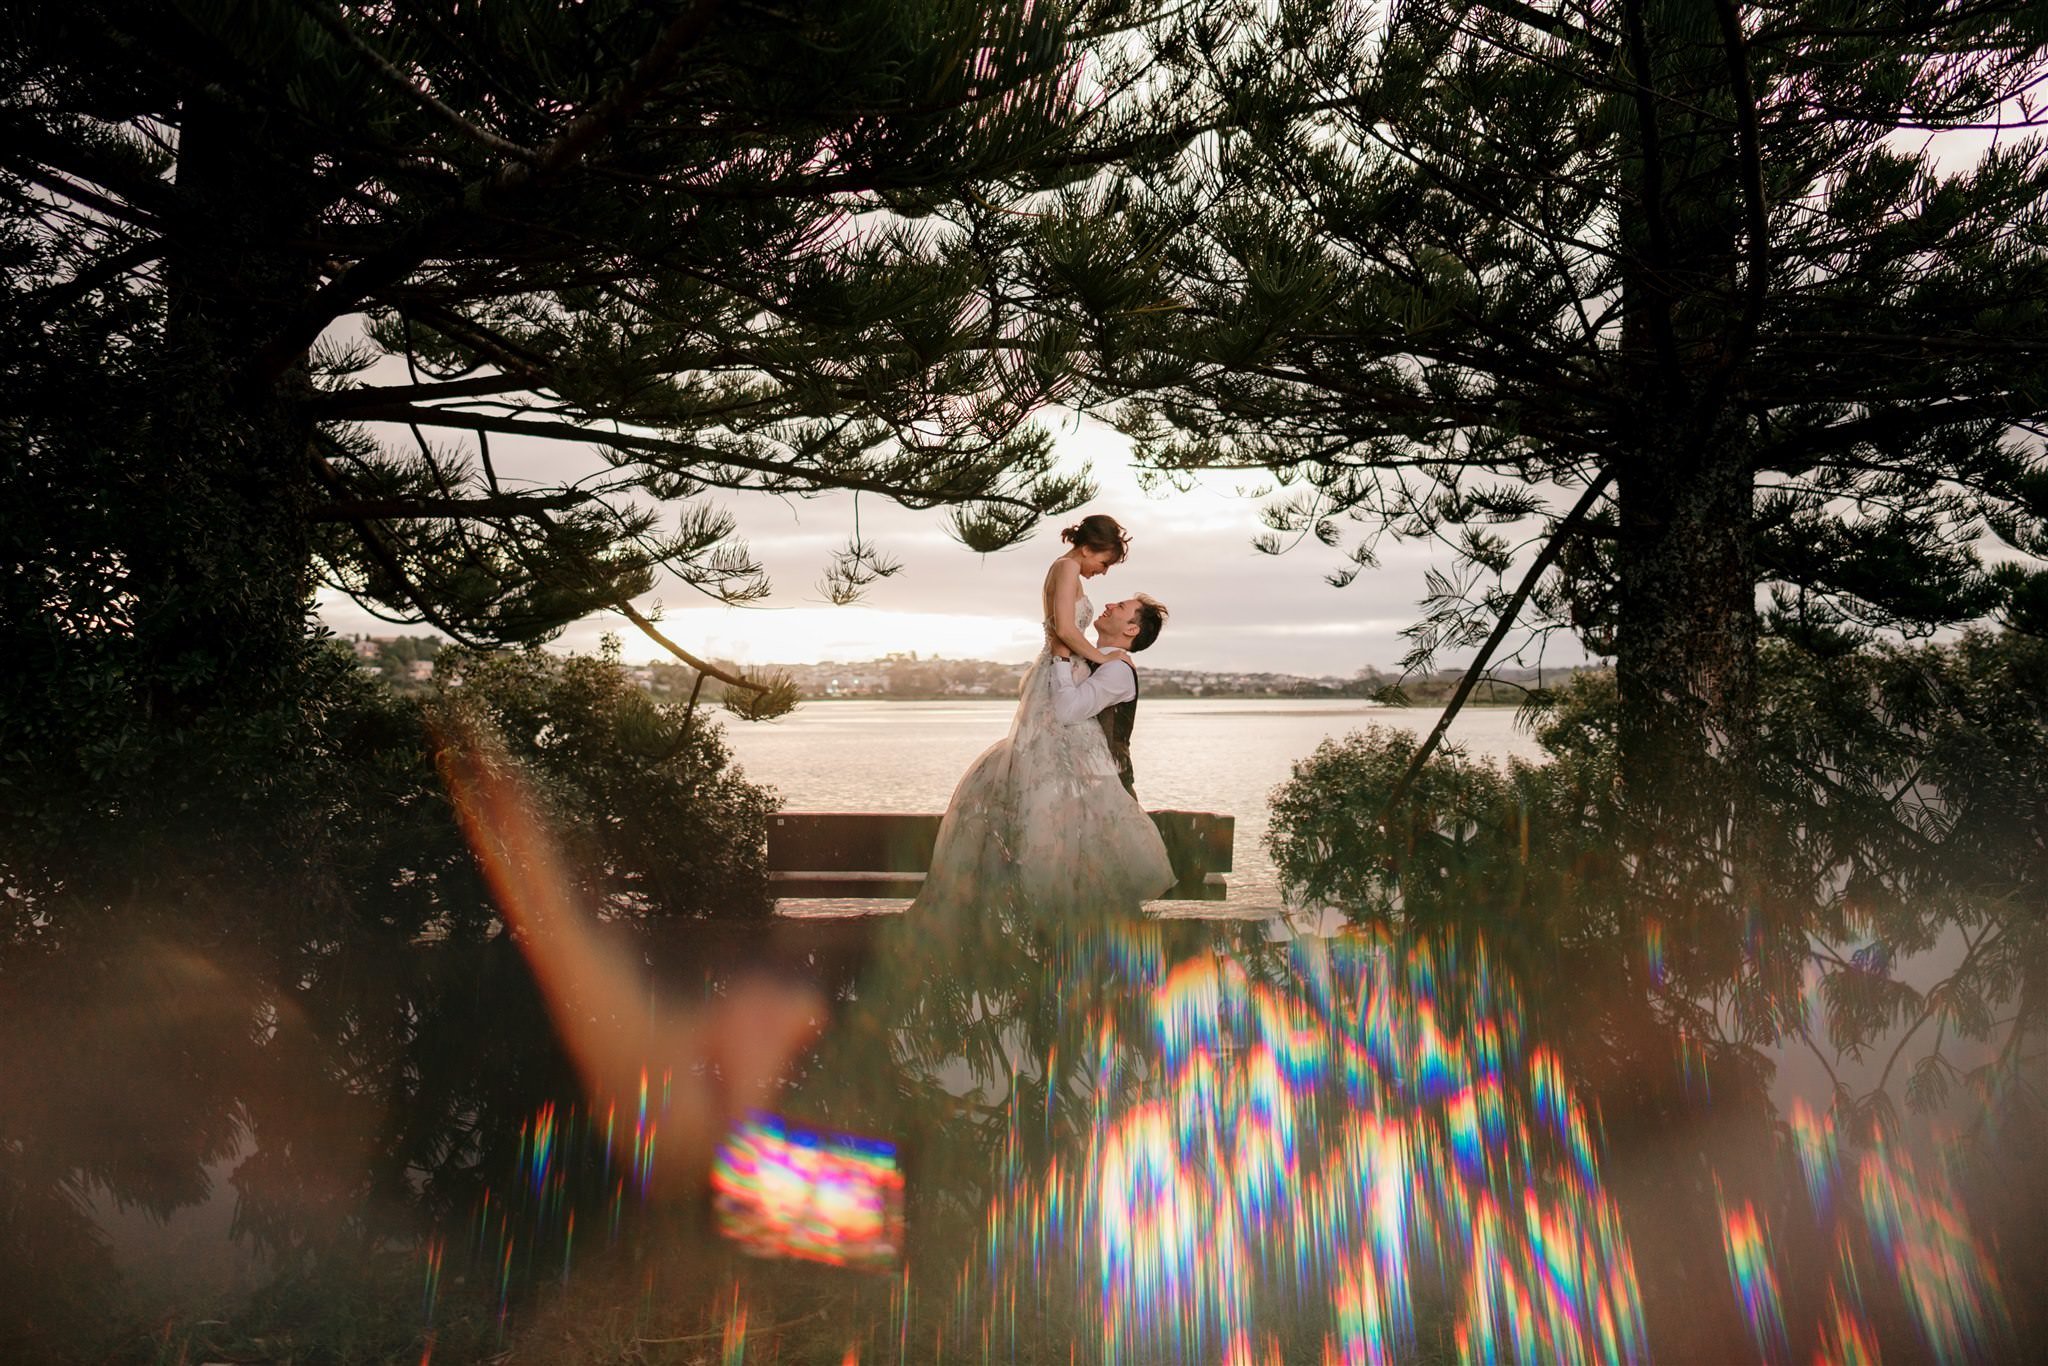 home-backyard-wedding-diy-best-kiwi-traditional-korean-hanbok-wedding-gown-Choson-ot-auckland-wedding-photographer-videography-dear-white-productions (89).jpg